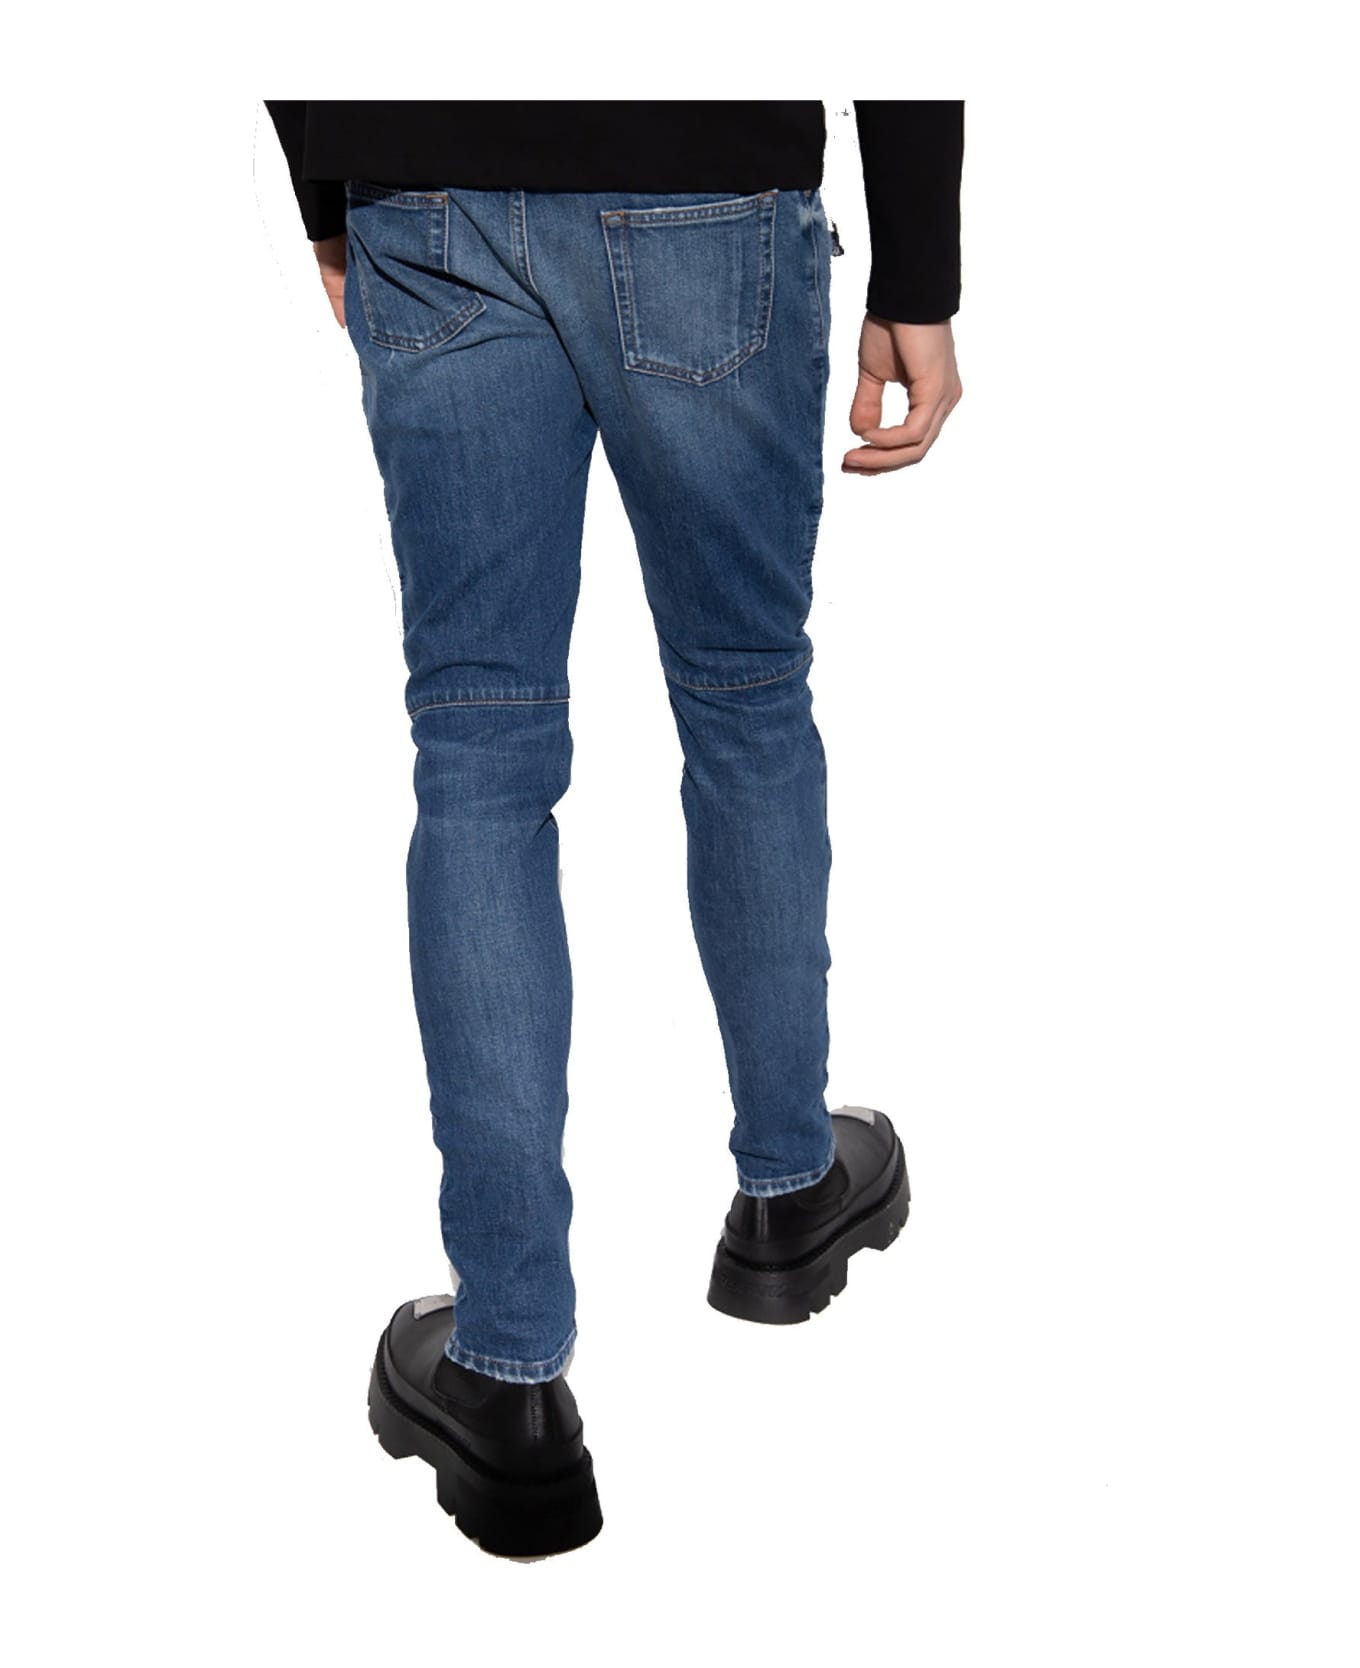 Balmain Slim Fit Jeans - Blue